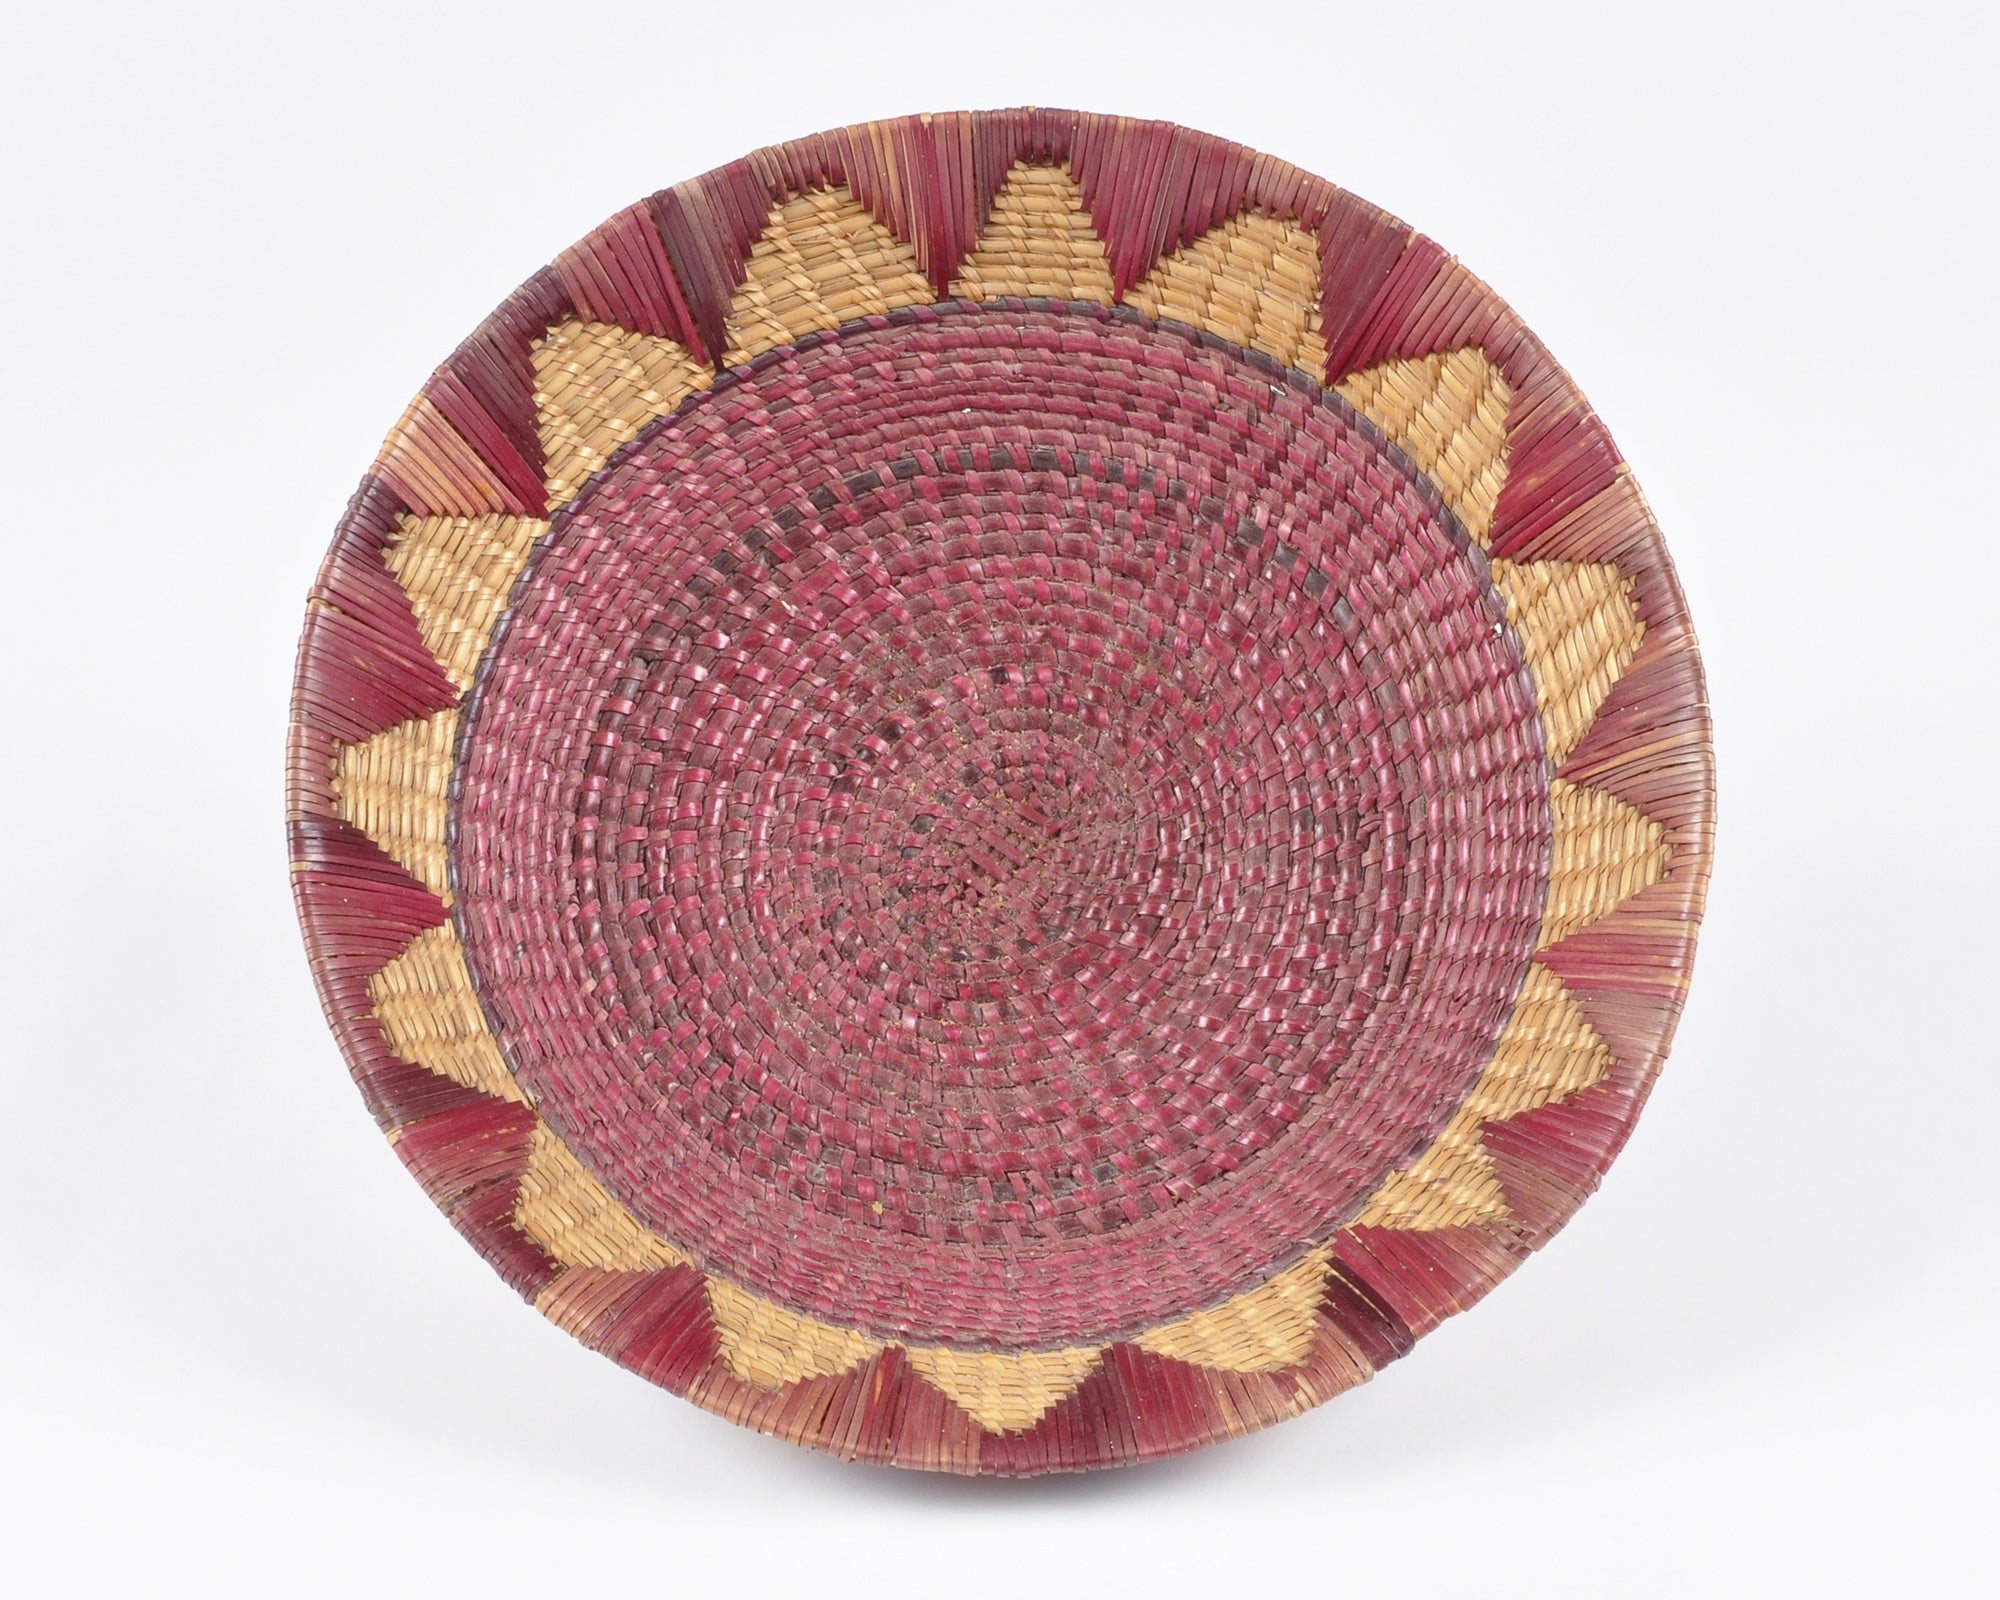 Vintage Tribal Hand Woven Bowl Basket-Two Tone Detail-Burgundy and Natural Tamara Scott Designs